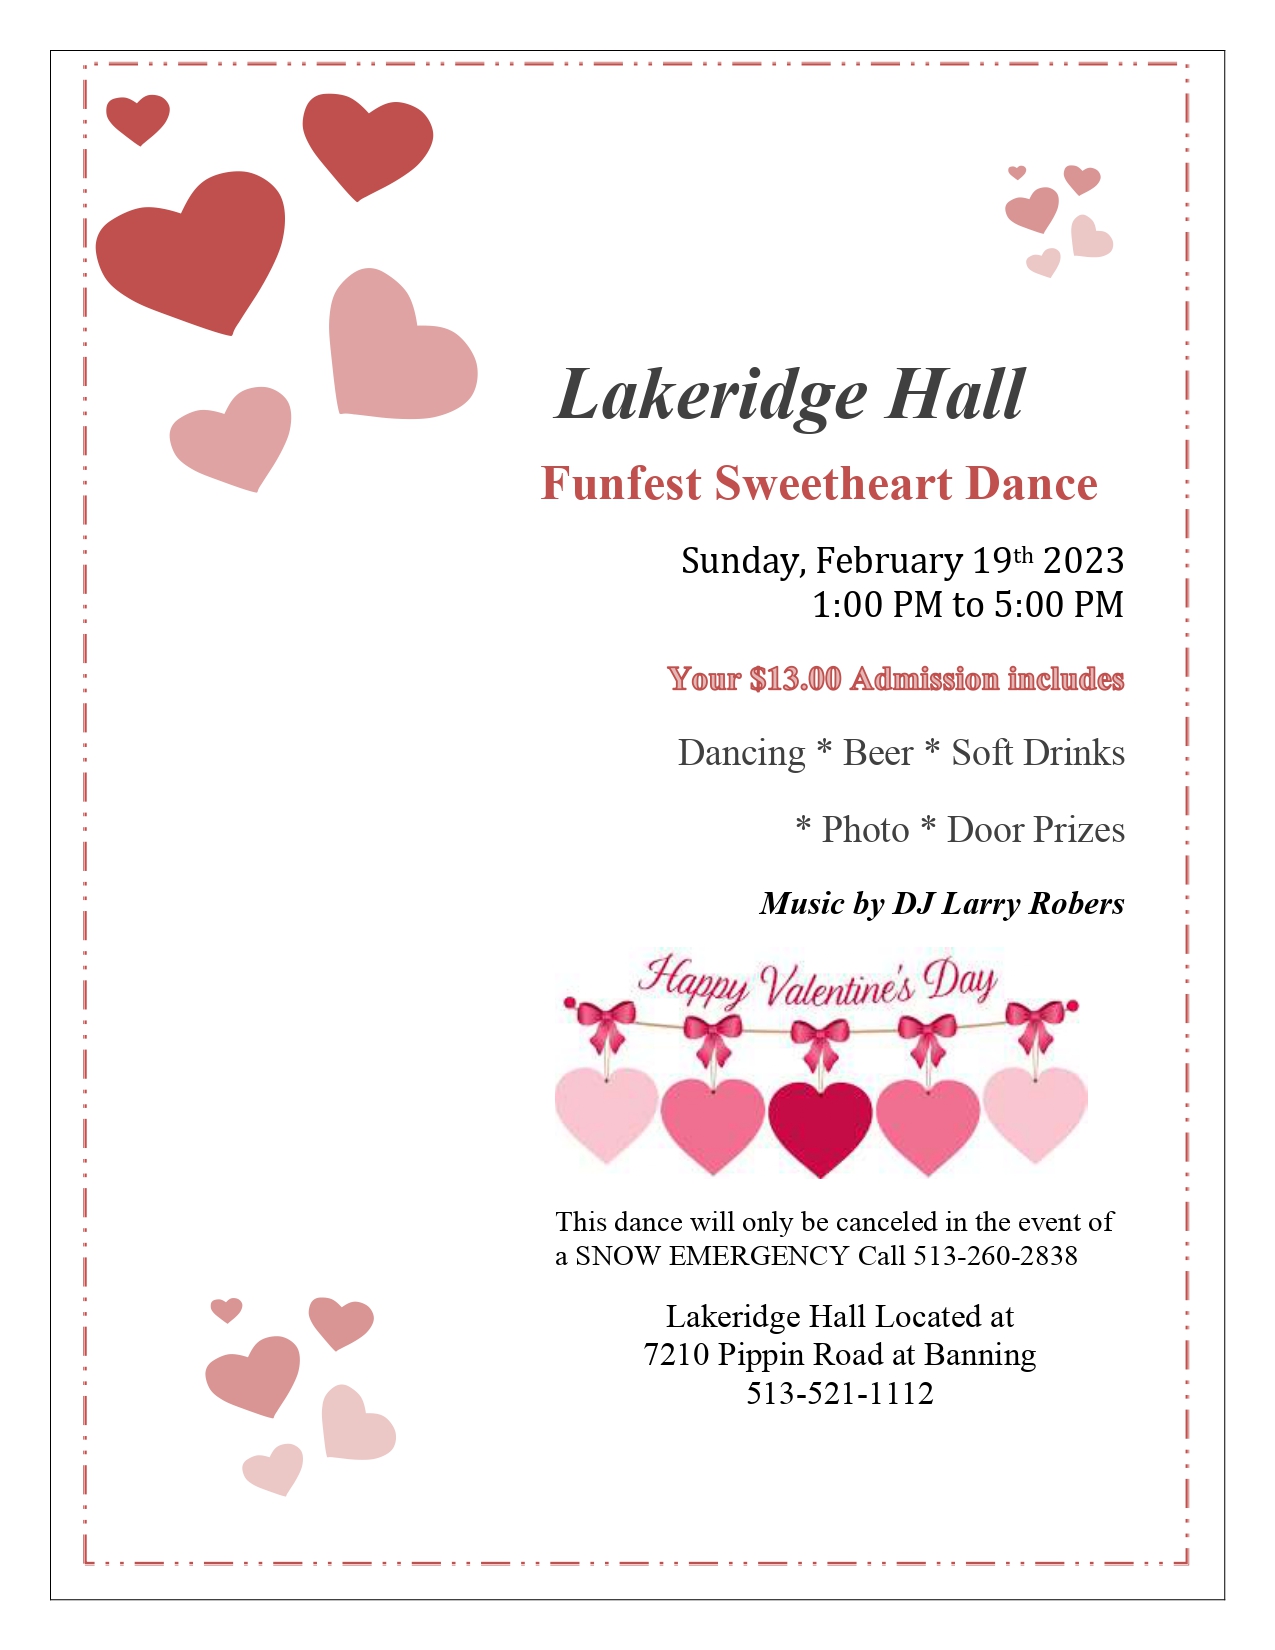 Lakeridge Hall Funfest Sweetheart Dance 2023